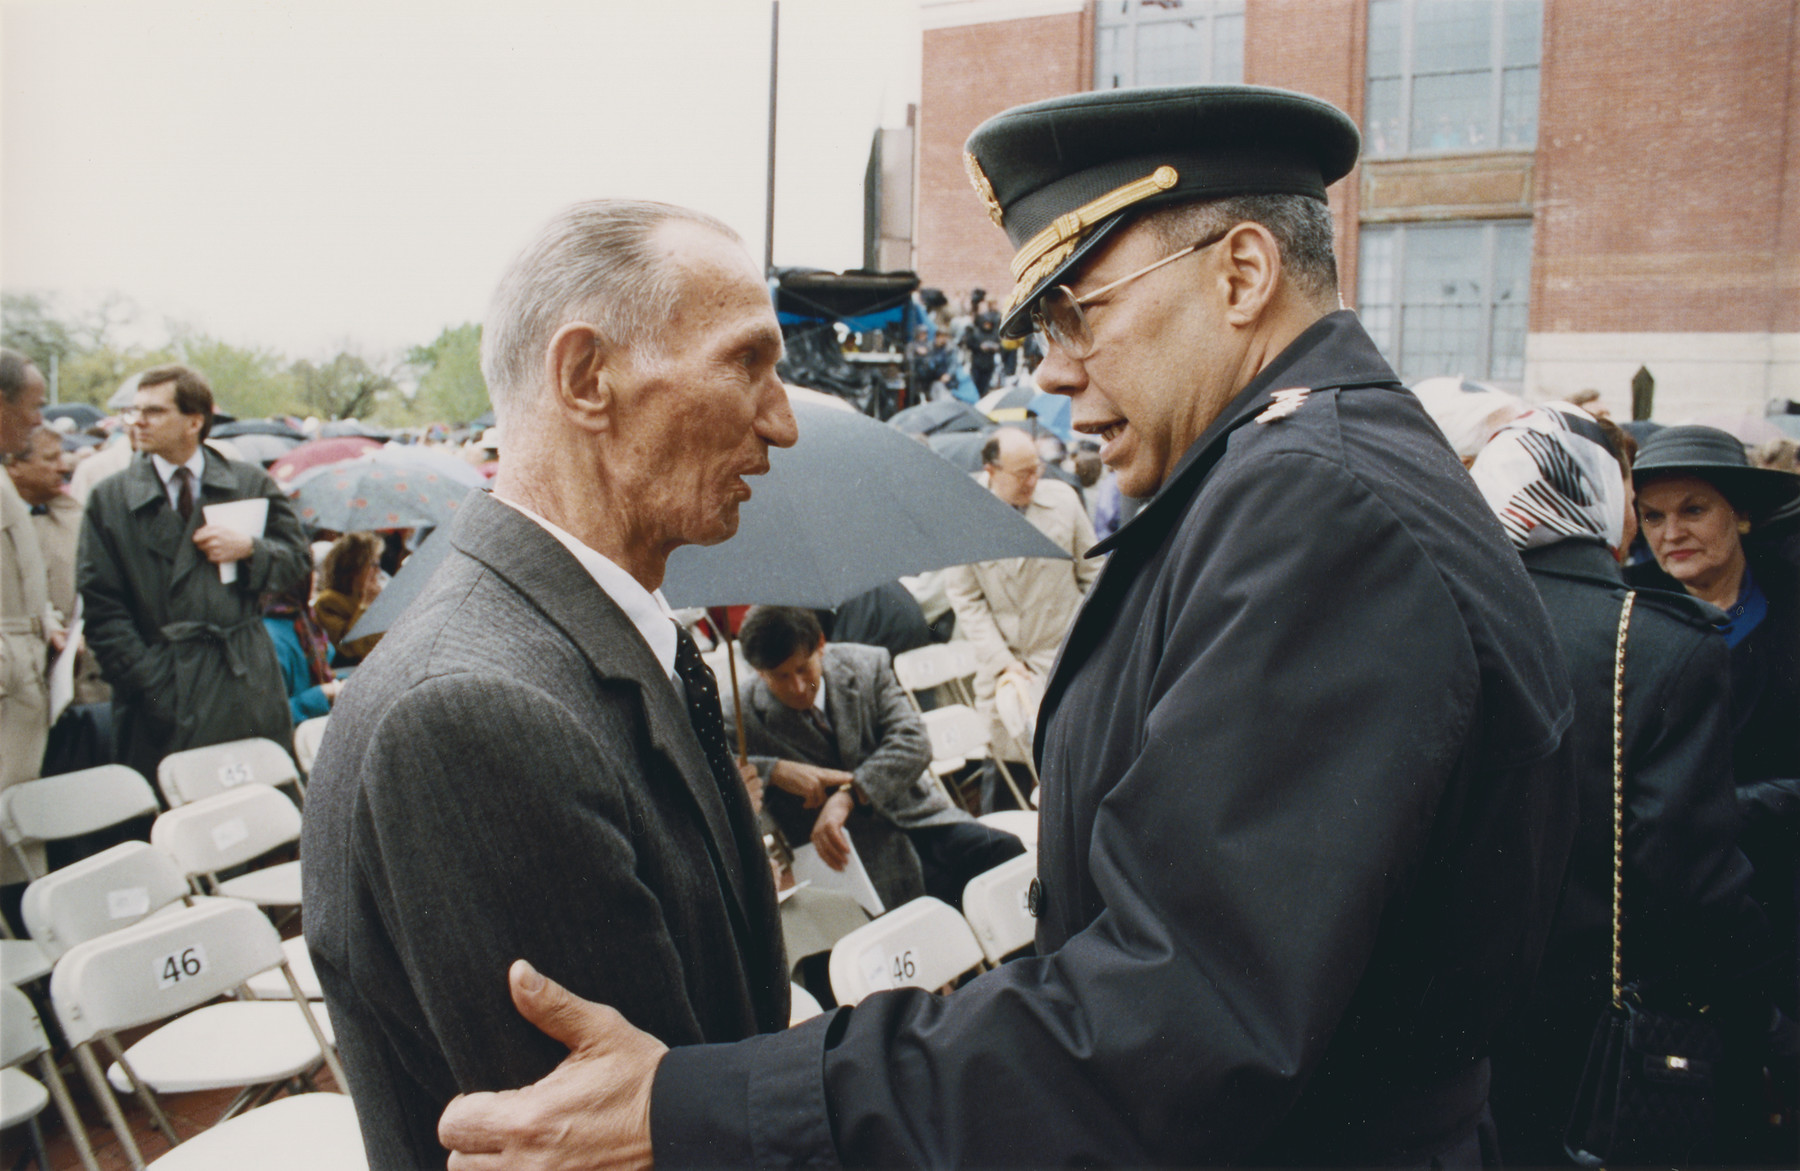 Jan Karski and General Colin Powell meet during the opening ceremonies of the U.S. Holocaust Memorial Museum.